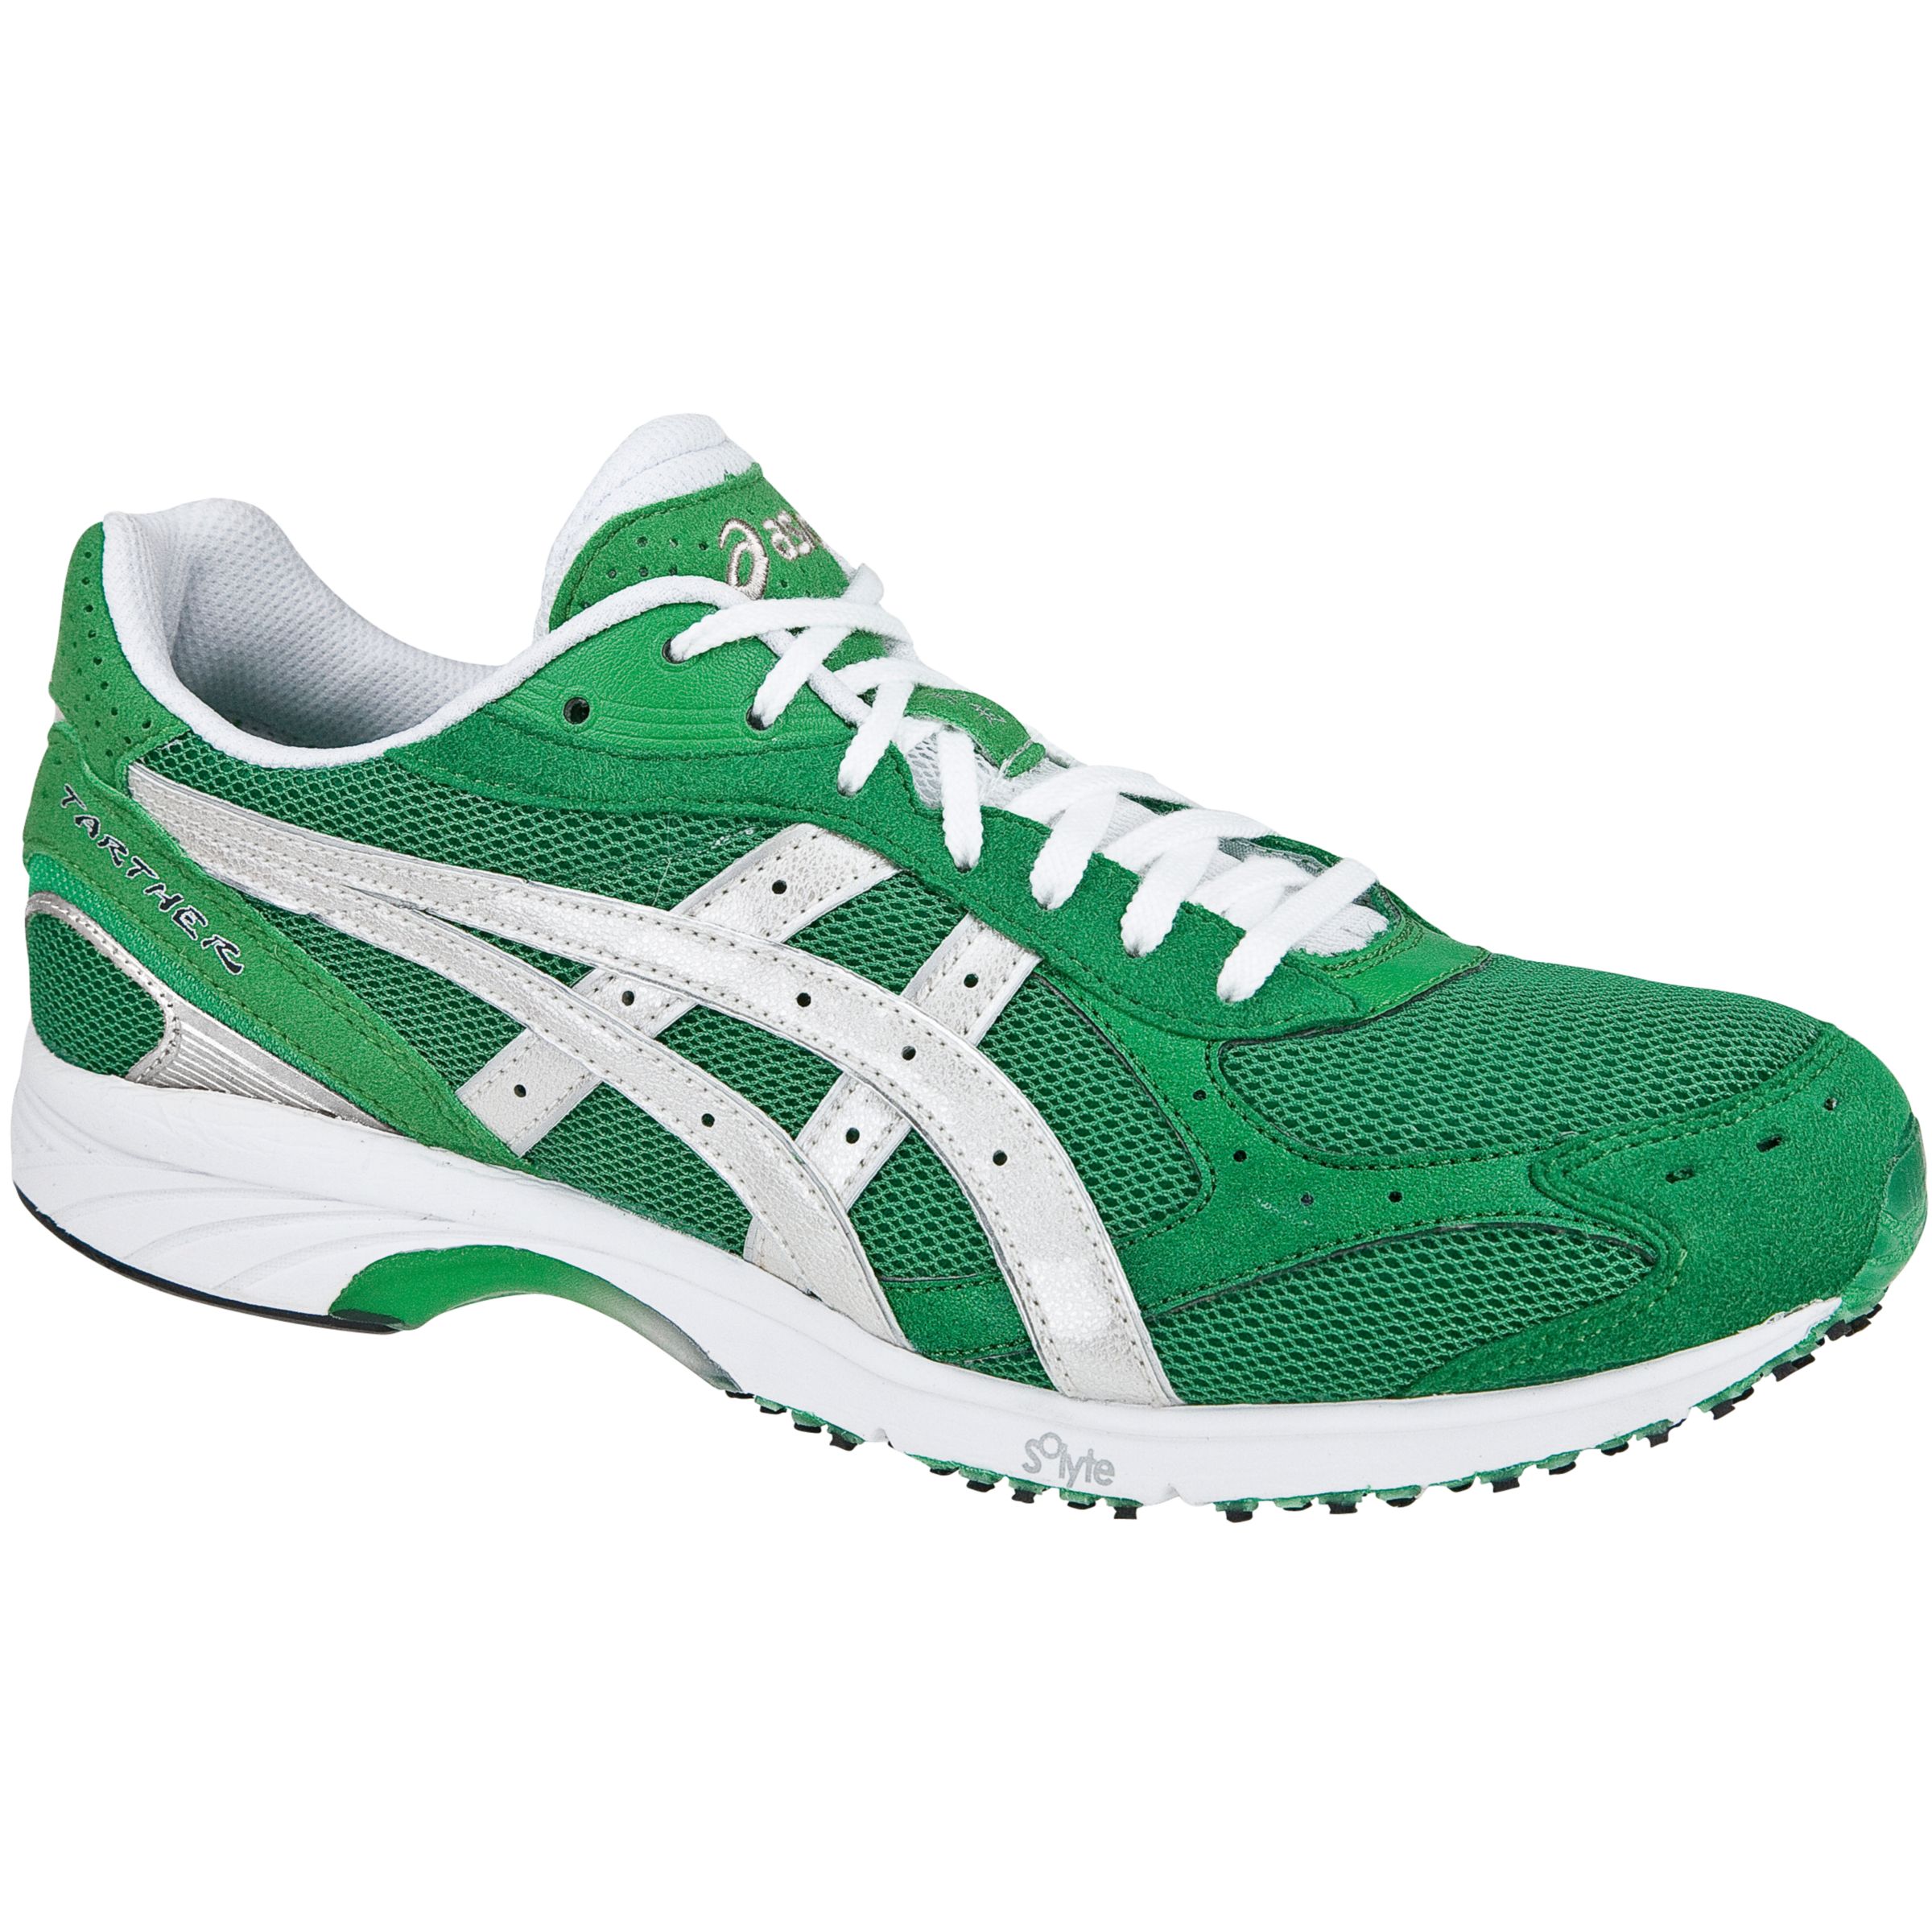 Asics Gel Tarther Speed Running Shoes, Green/White